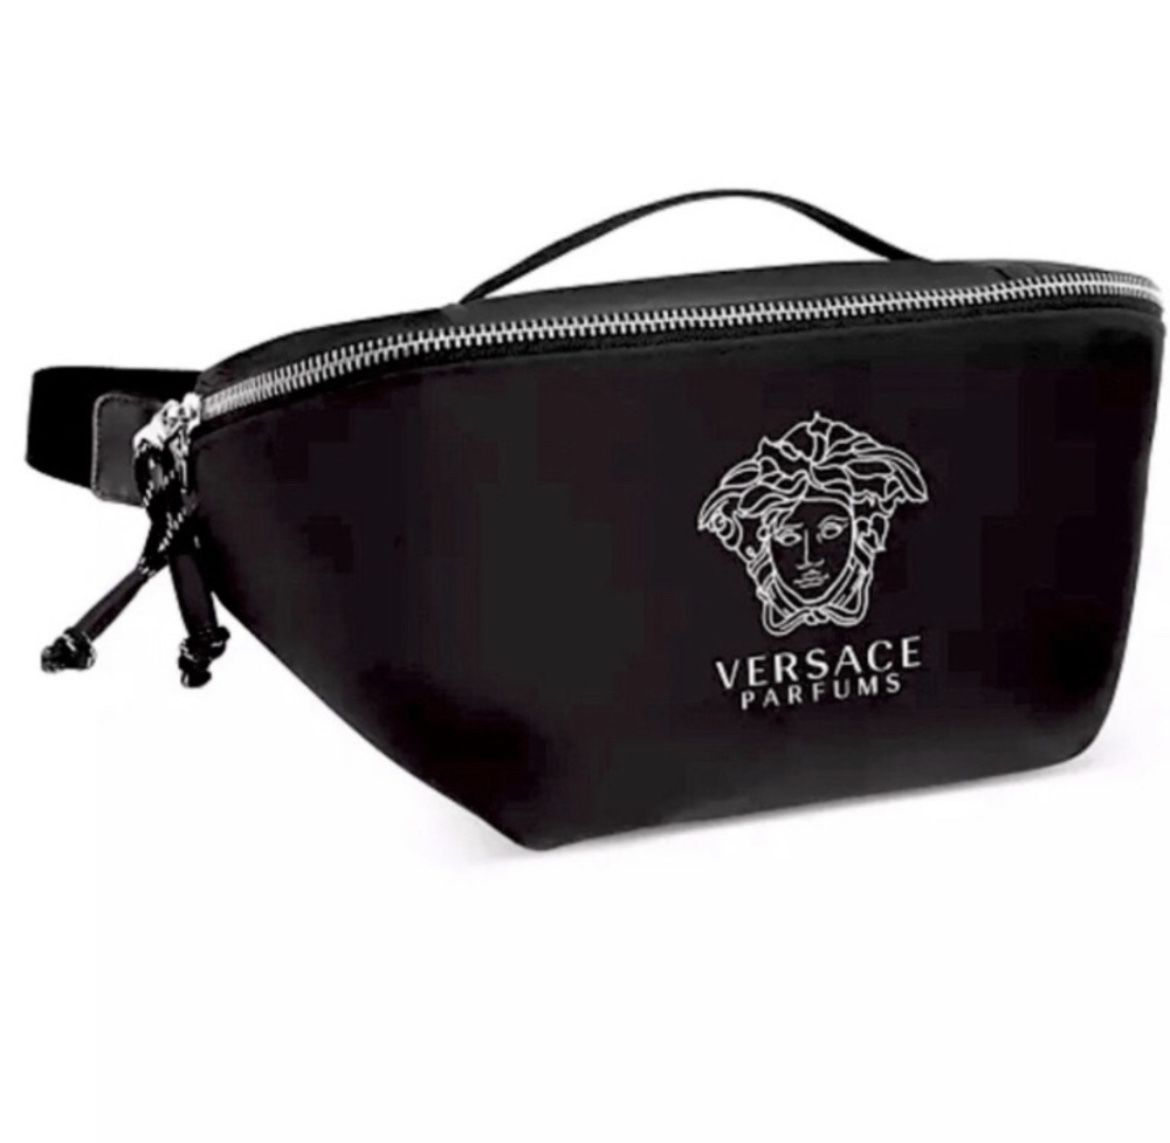 Versace Parfums Beltbag / Crossbody